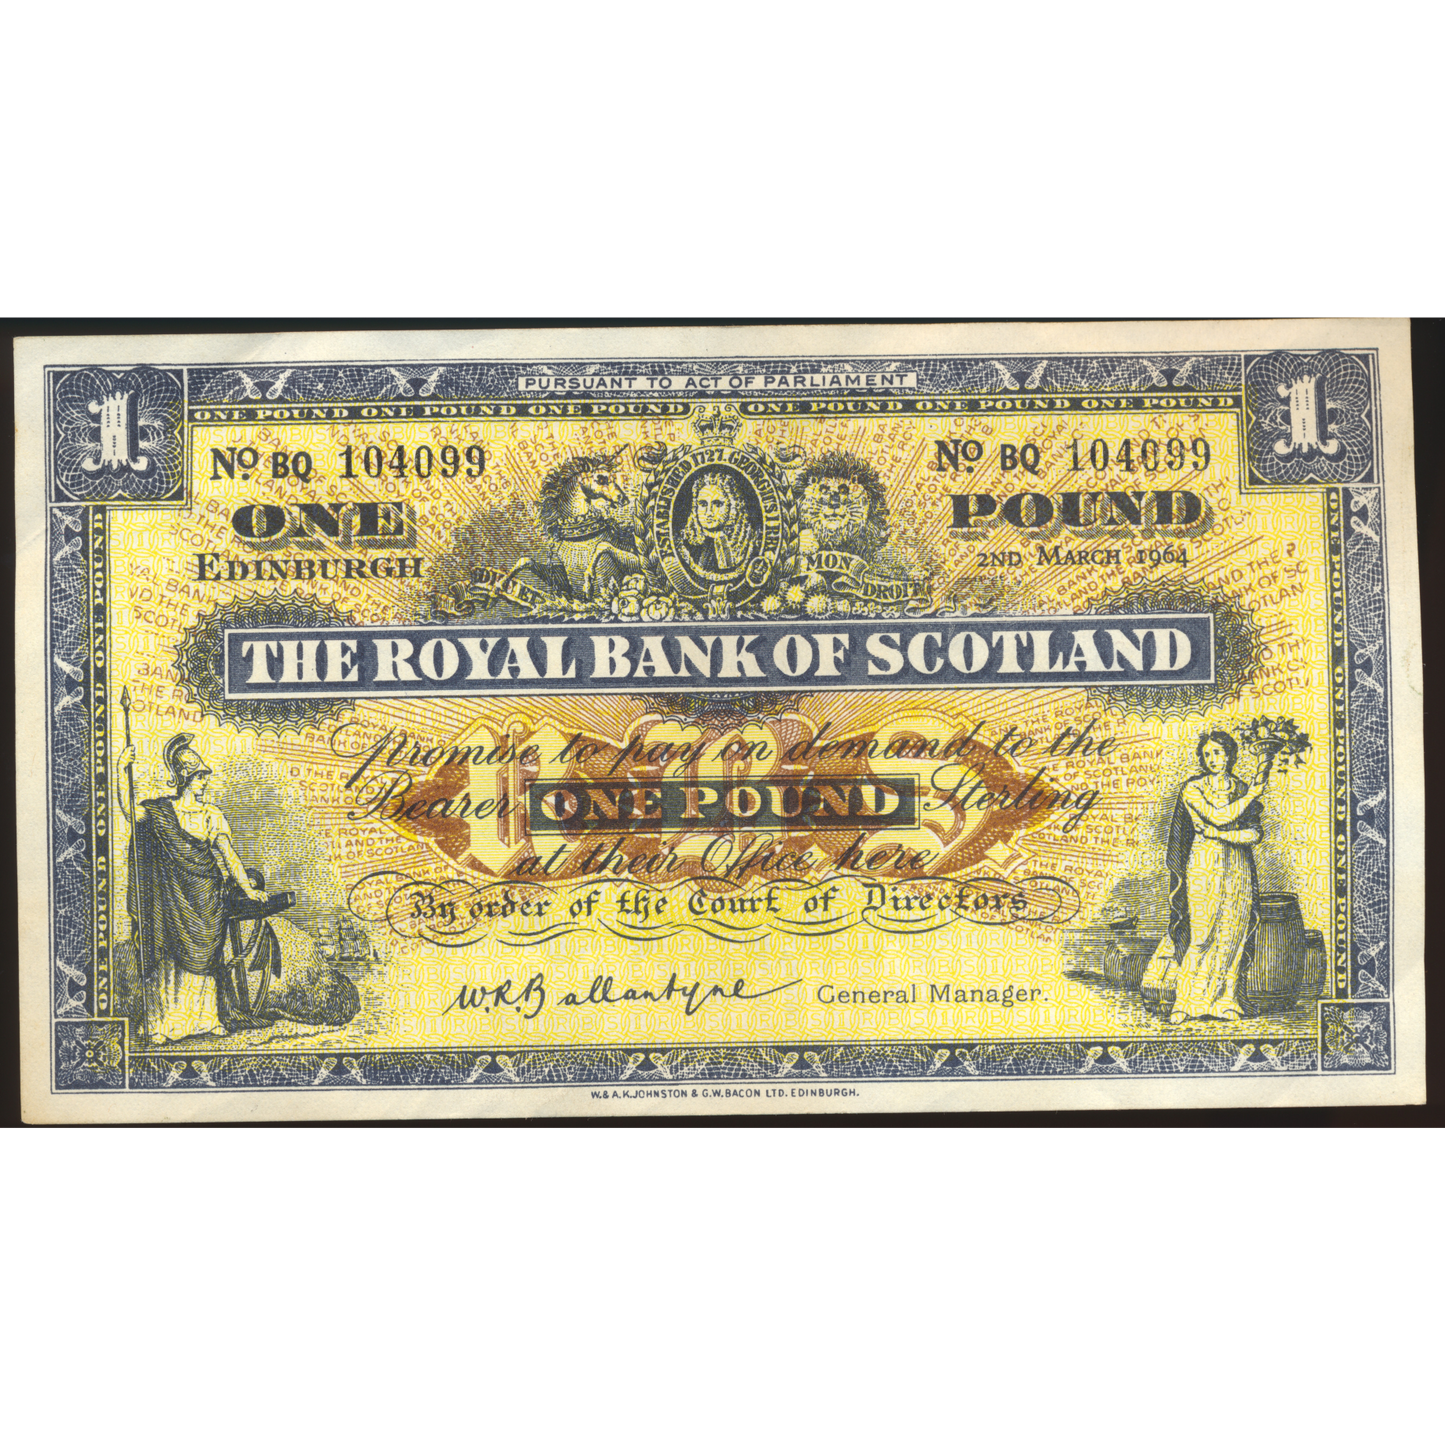 SC803 RB55h 1964 Royal Bank of Scotland £1 AUNC